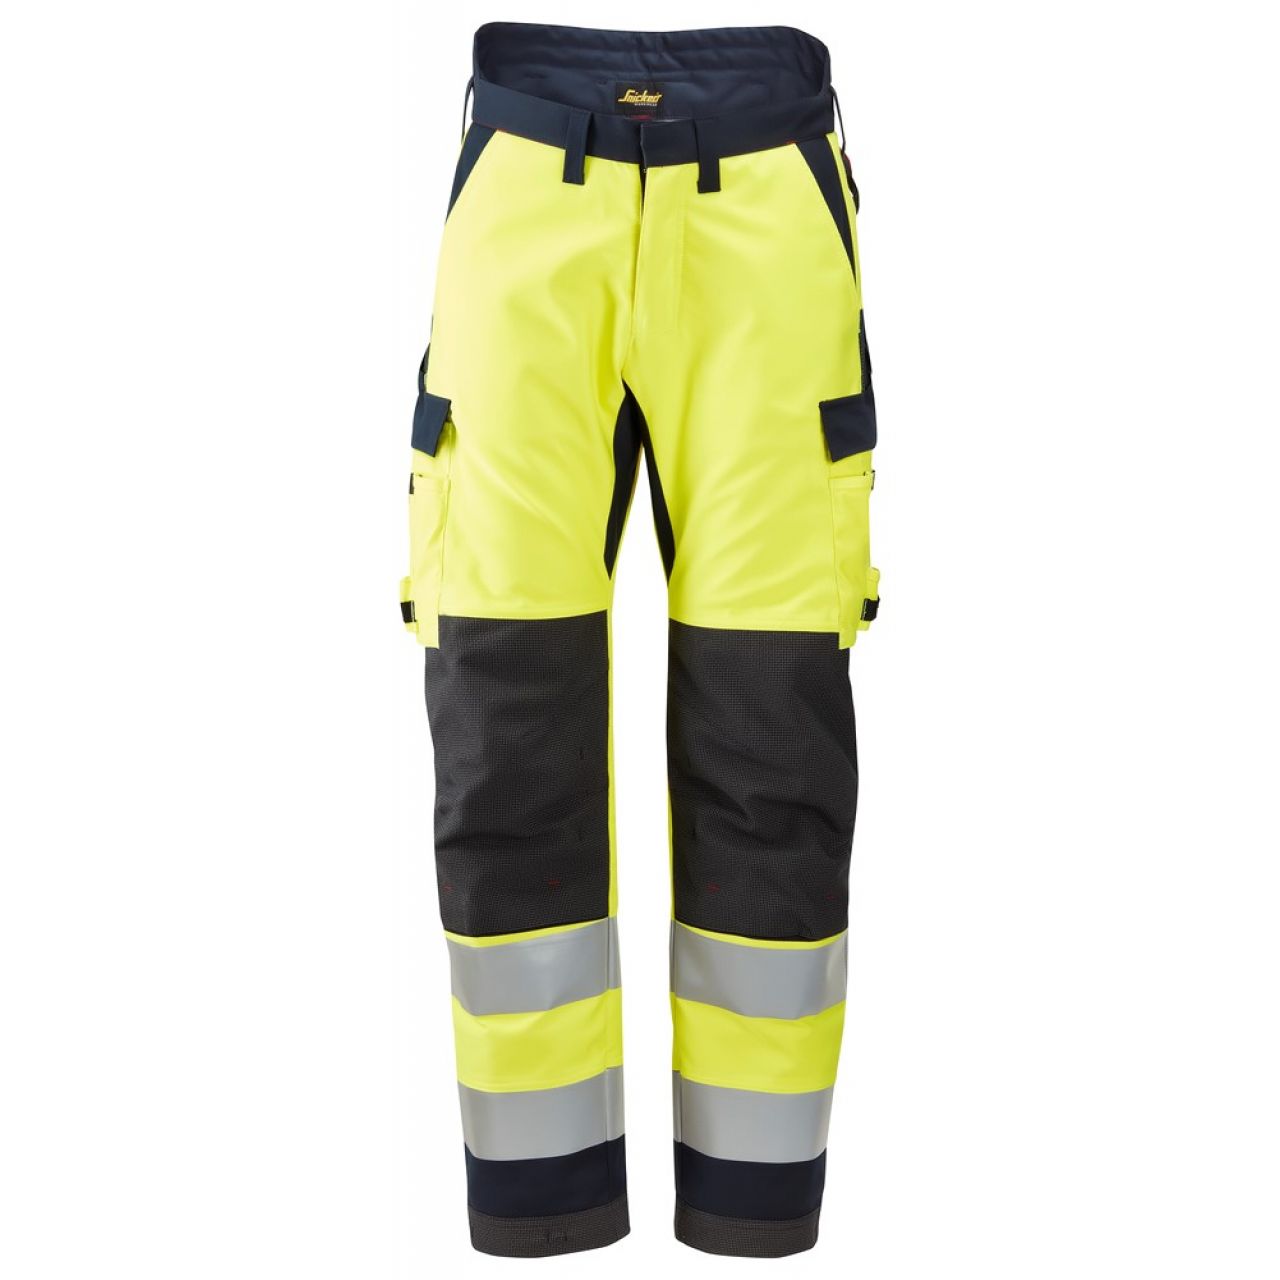 6663 Pantalones largos de trabajo aislantes 37.5® de alta visibiidad clase 2 ProtecWork amarillo-azul marino talla 58